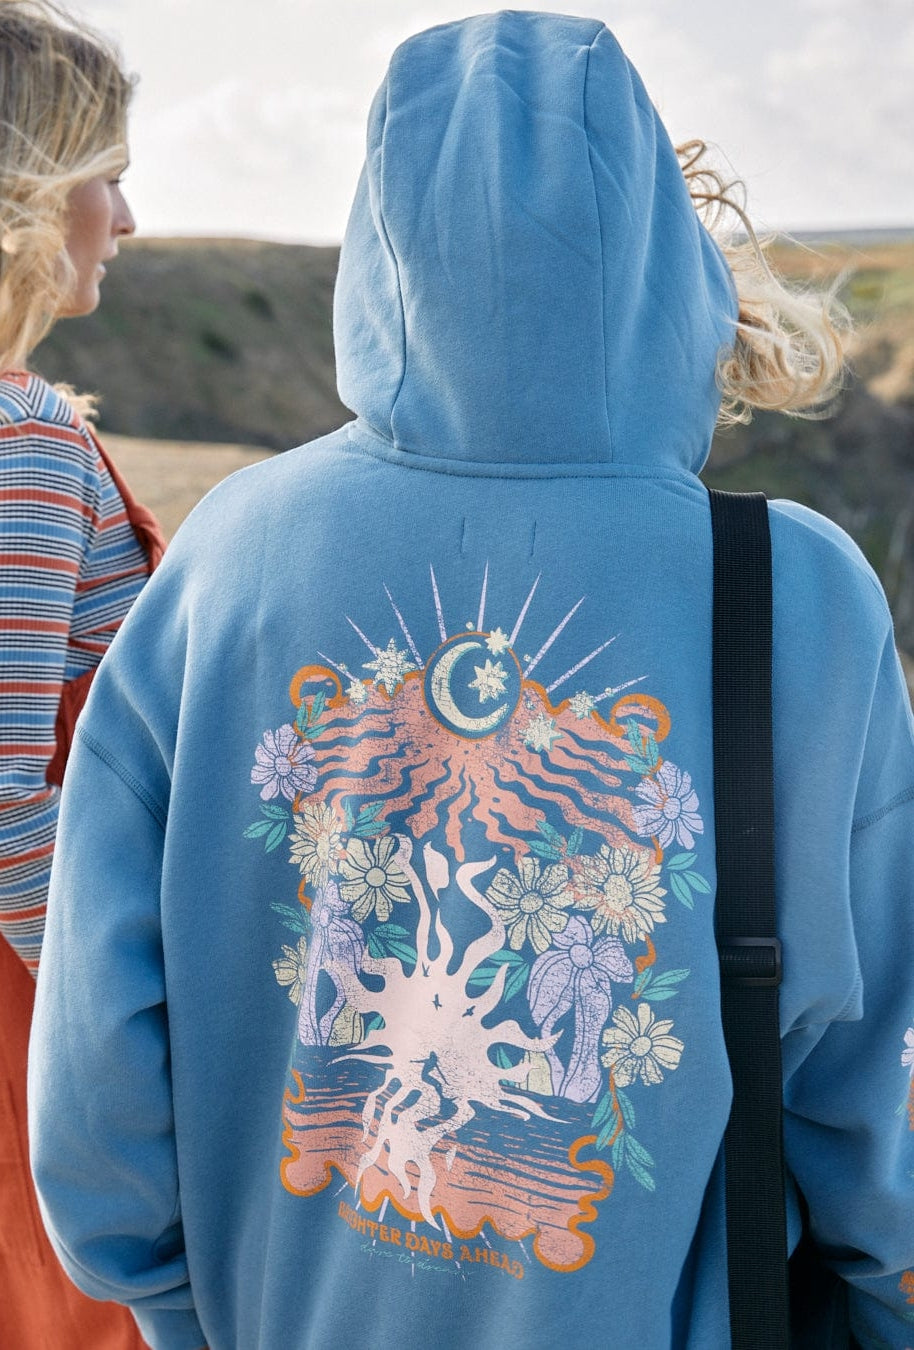 Women's Saltrock Better Days hooded sweatshirt in blue with floral moon print.